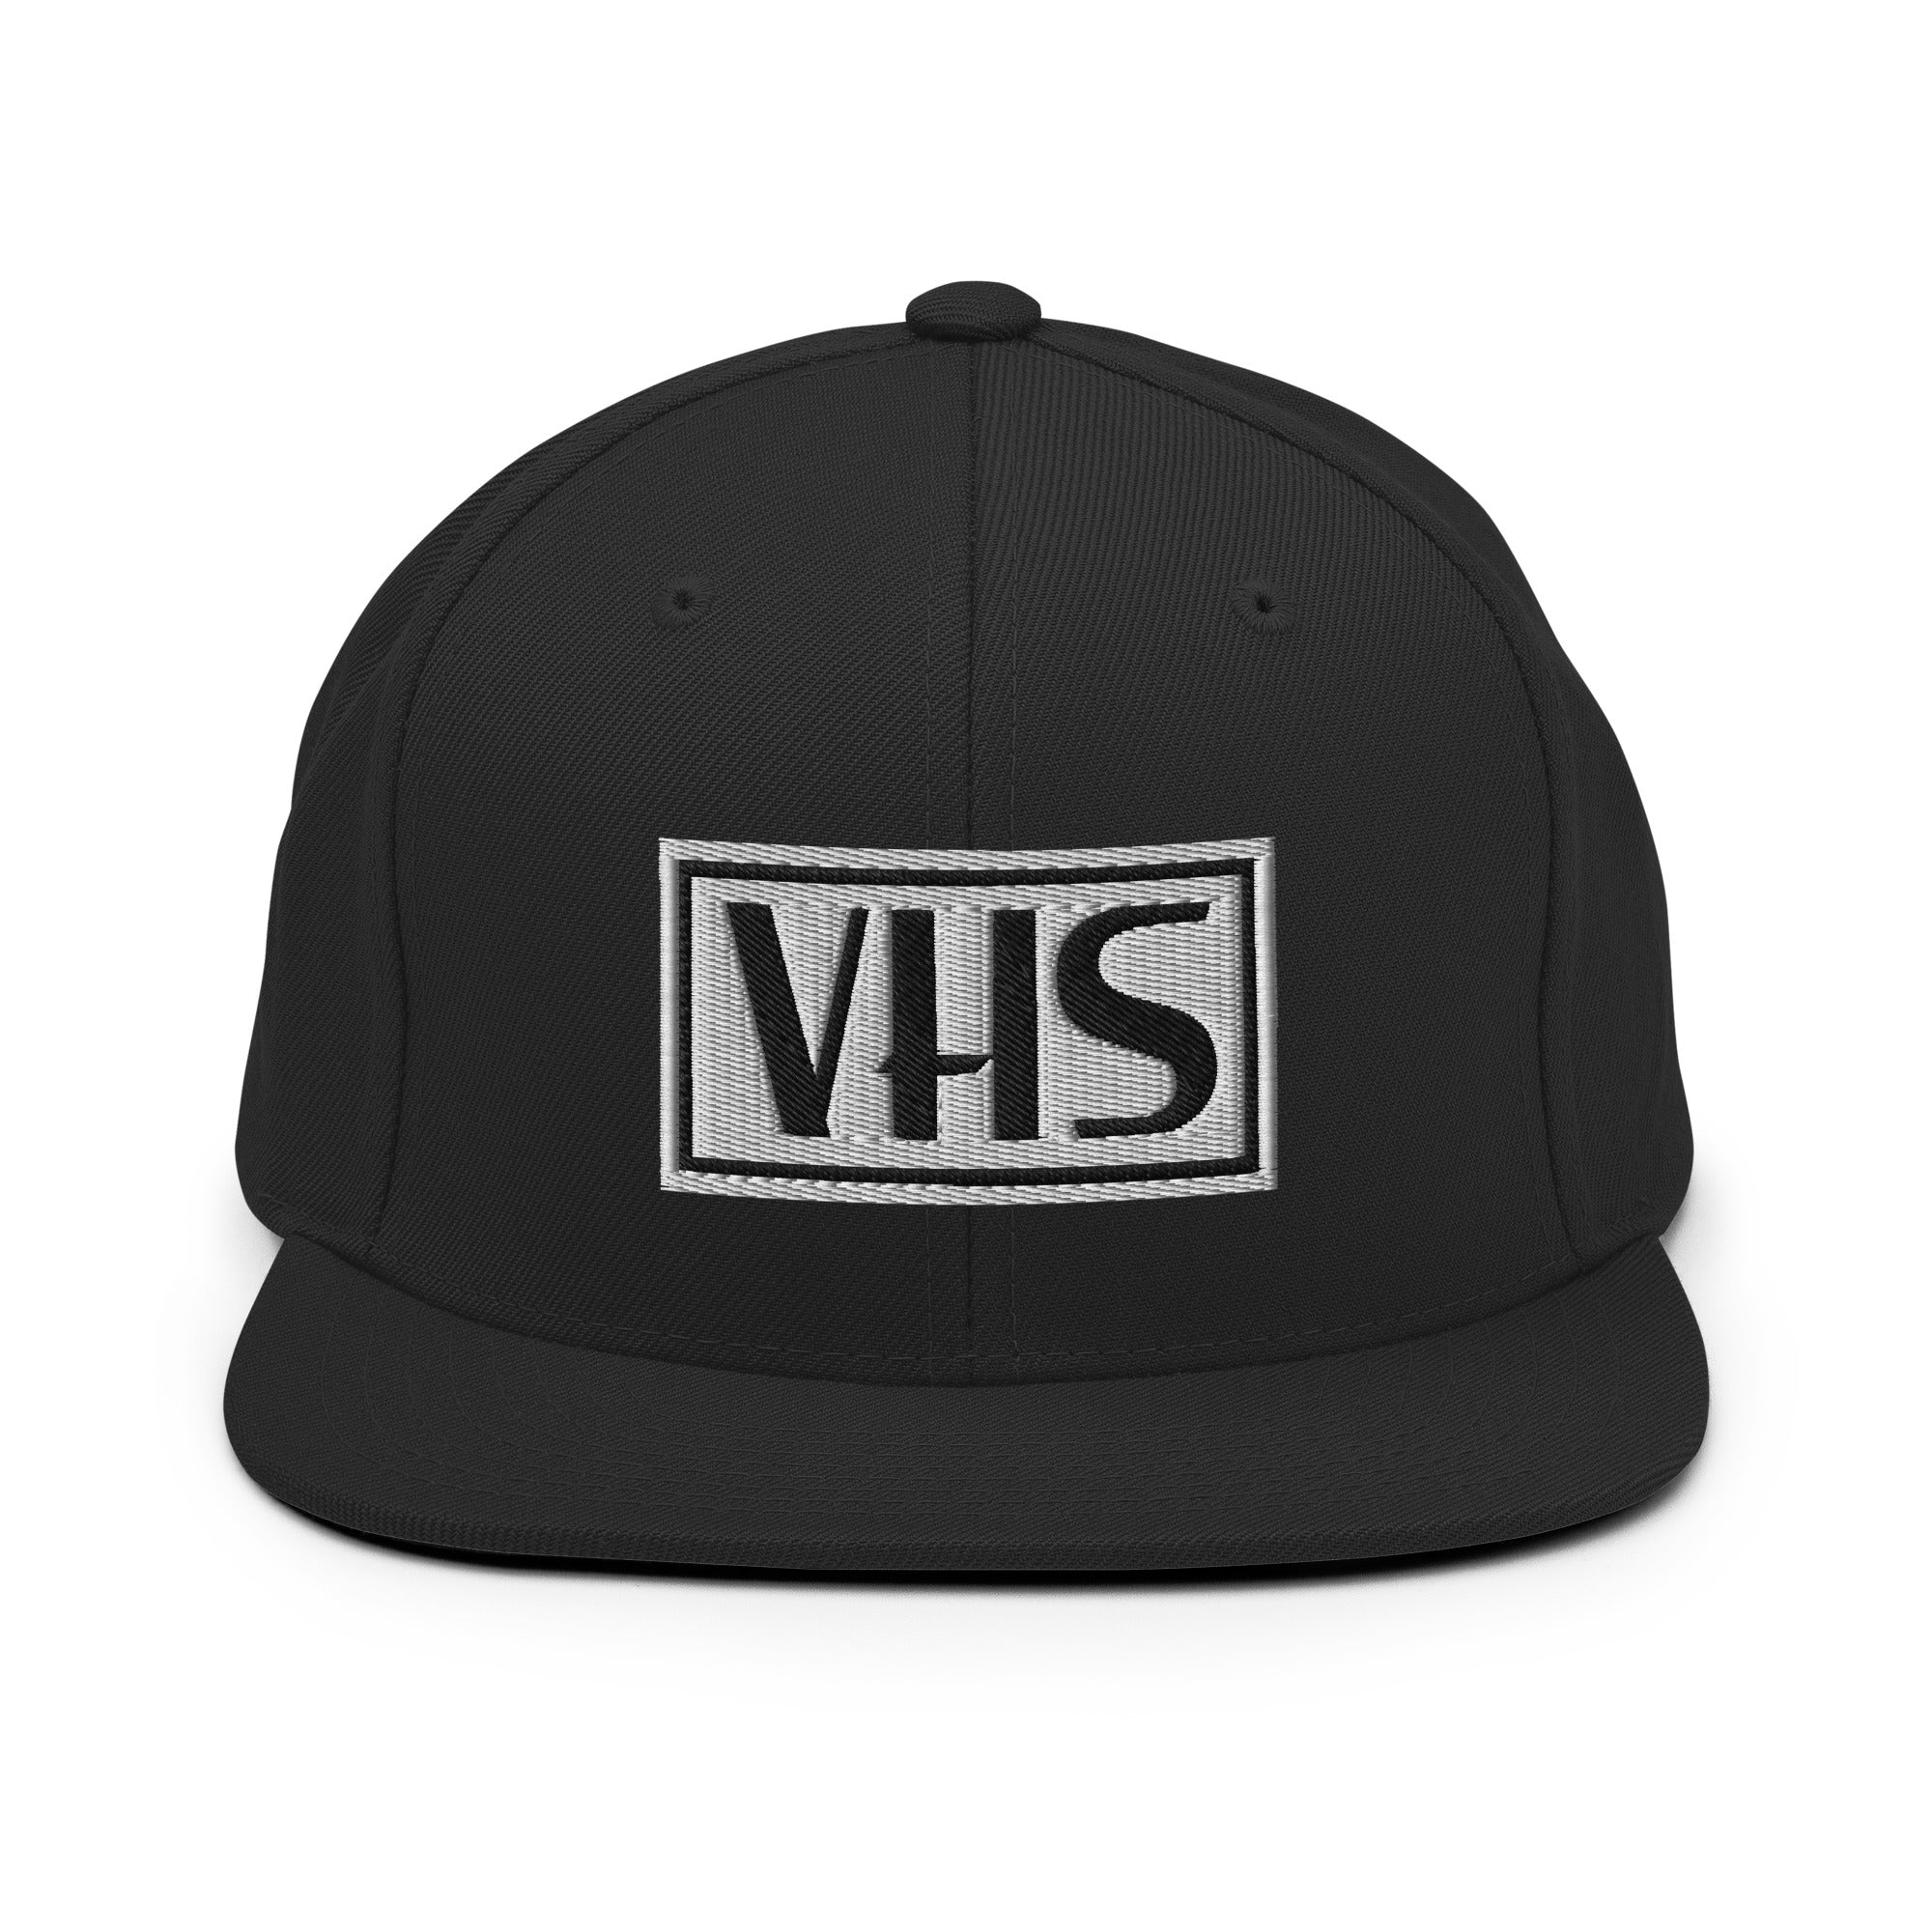 VHS - Snapback Hat